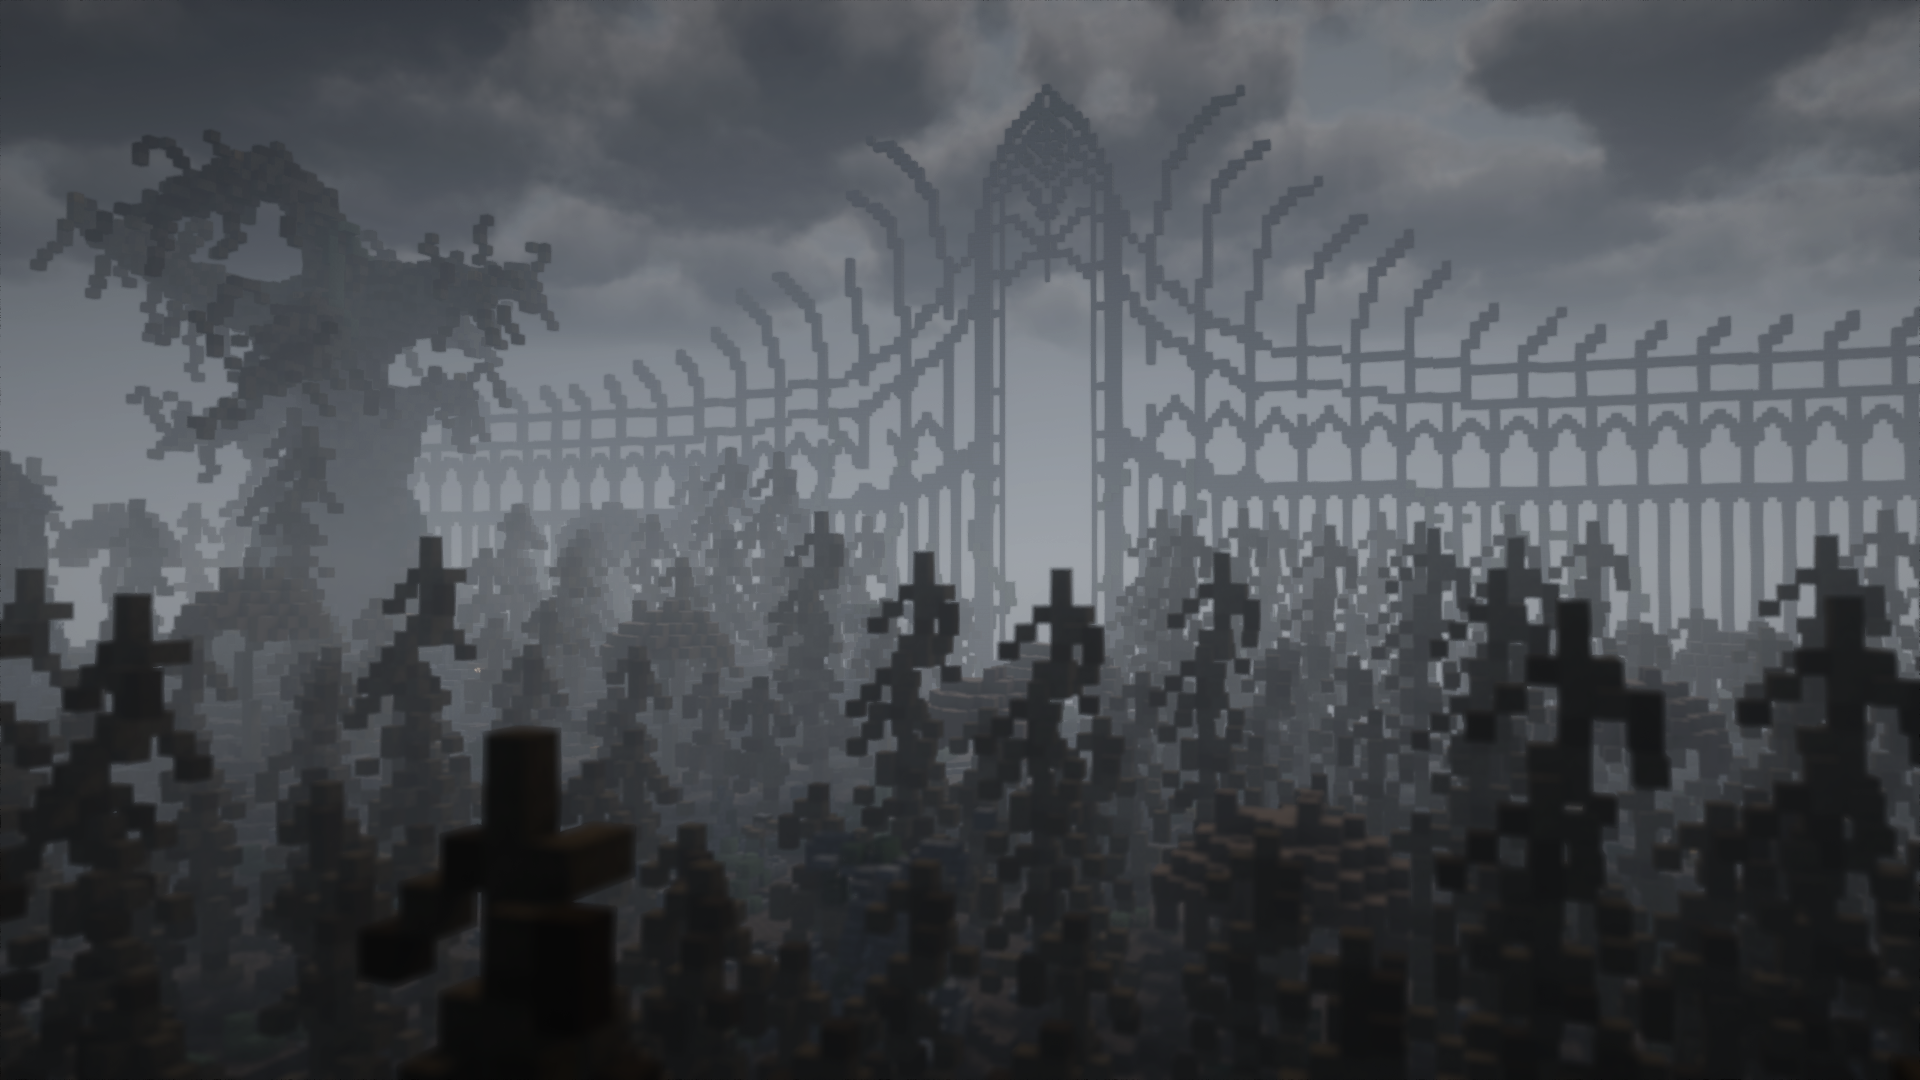 Cool Spooky Gate